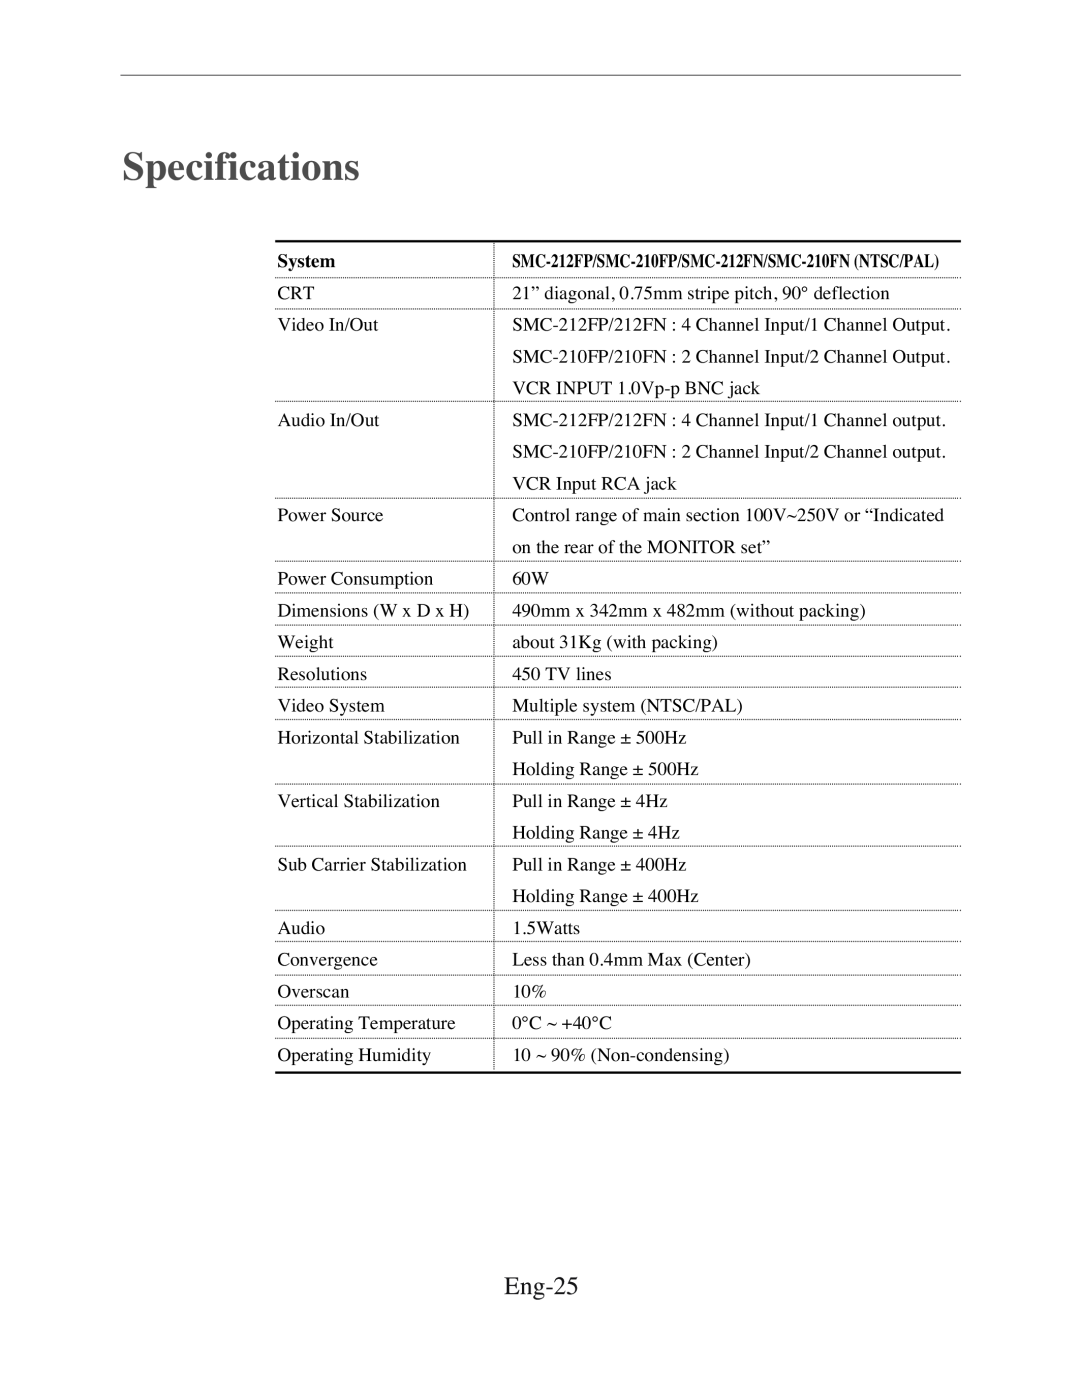 Samsung SMC-152FP, SMC-150FP manual Eng-25, Specifications, System, SMC-212FP/SMC-210FP/SMC-212FN/SMC-210FN NTSC/PAL 